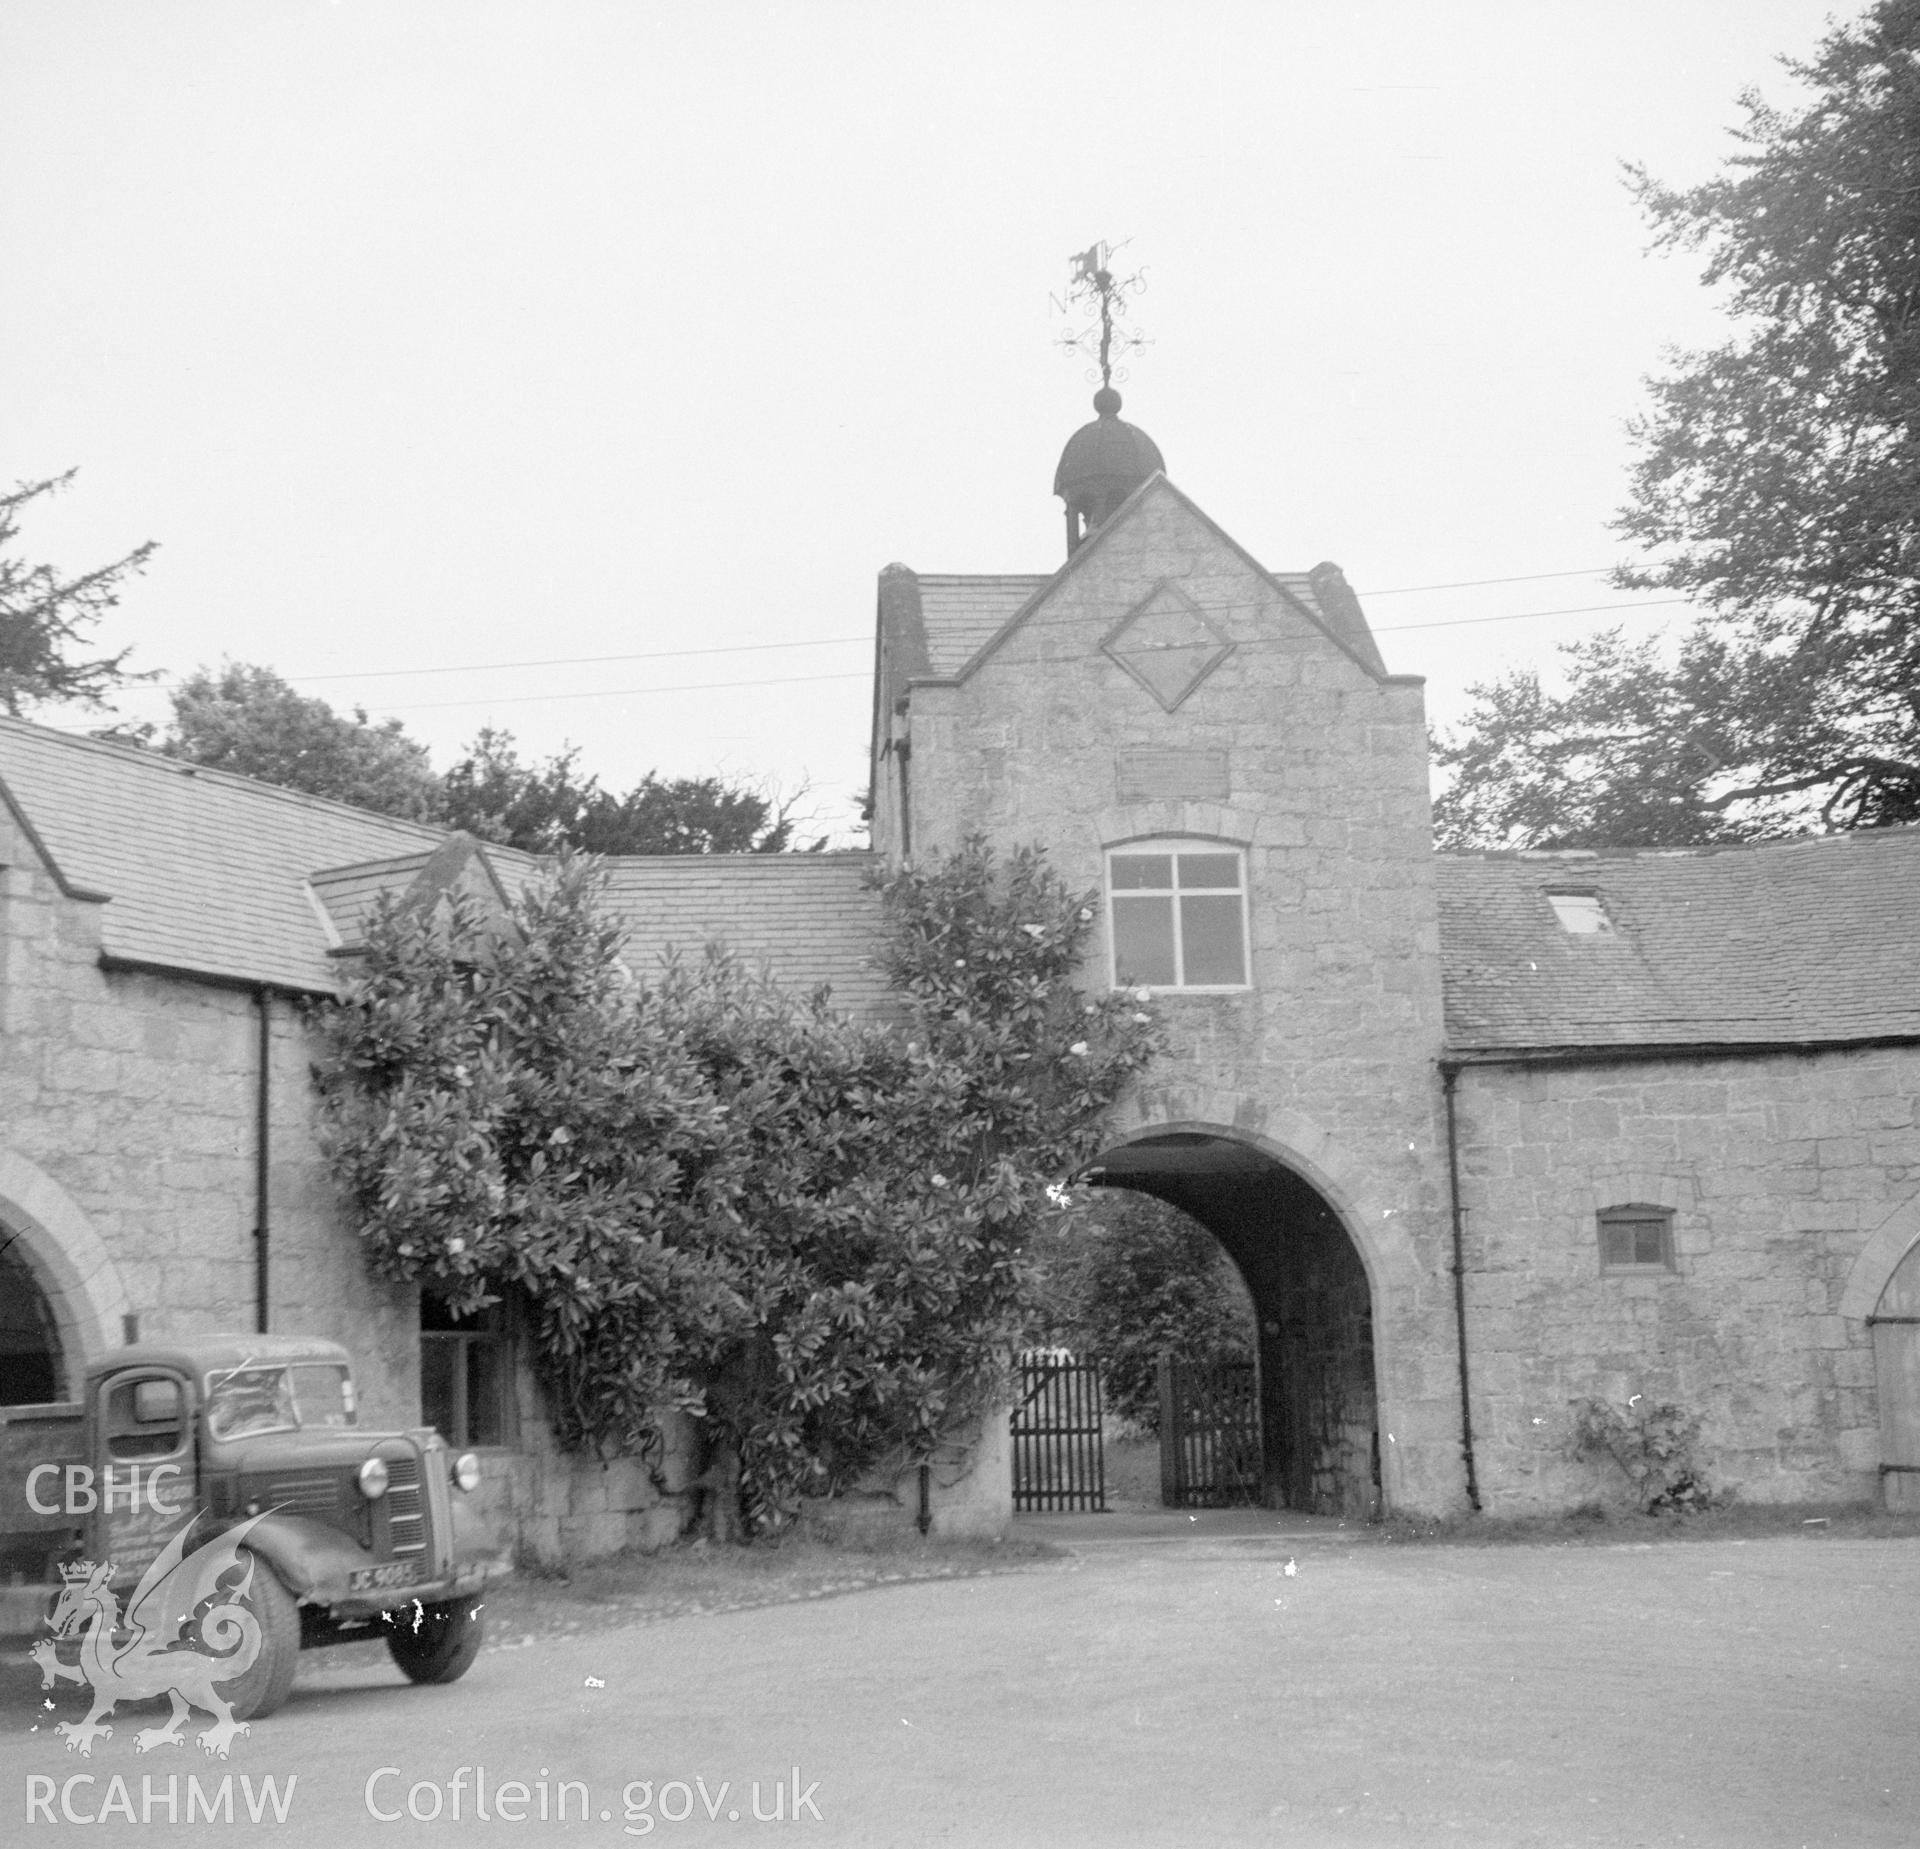 Digital copy of an undated nitrate negative showing view of gateway and courtyard at Bodrhyddan Hall, Rhuddlan, Flintshire.